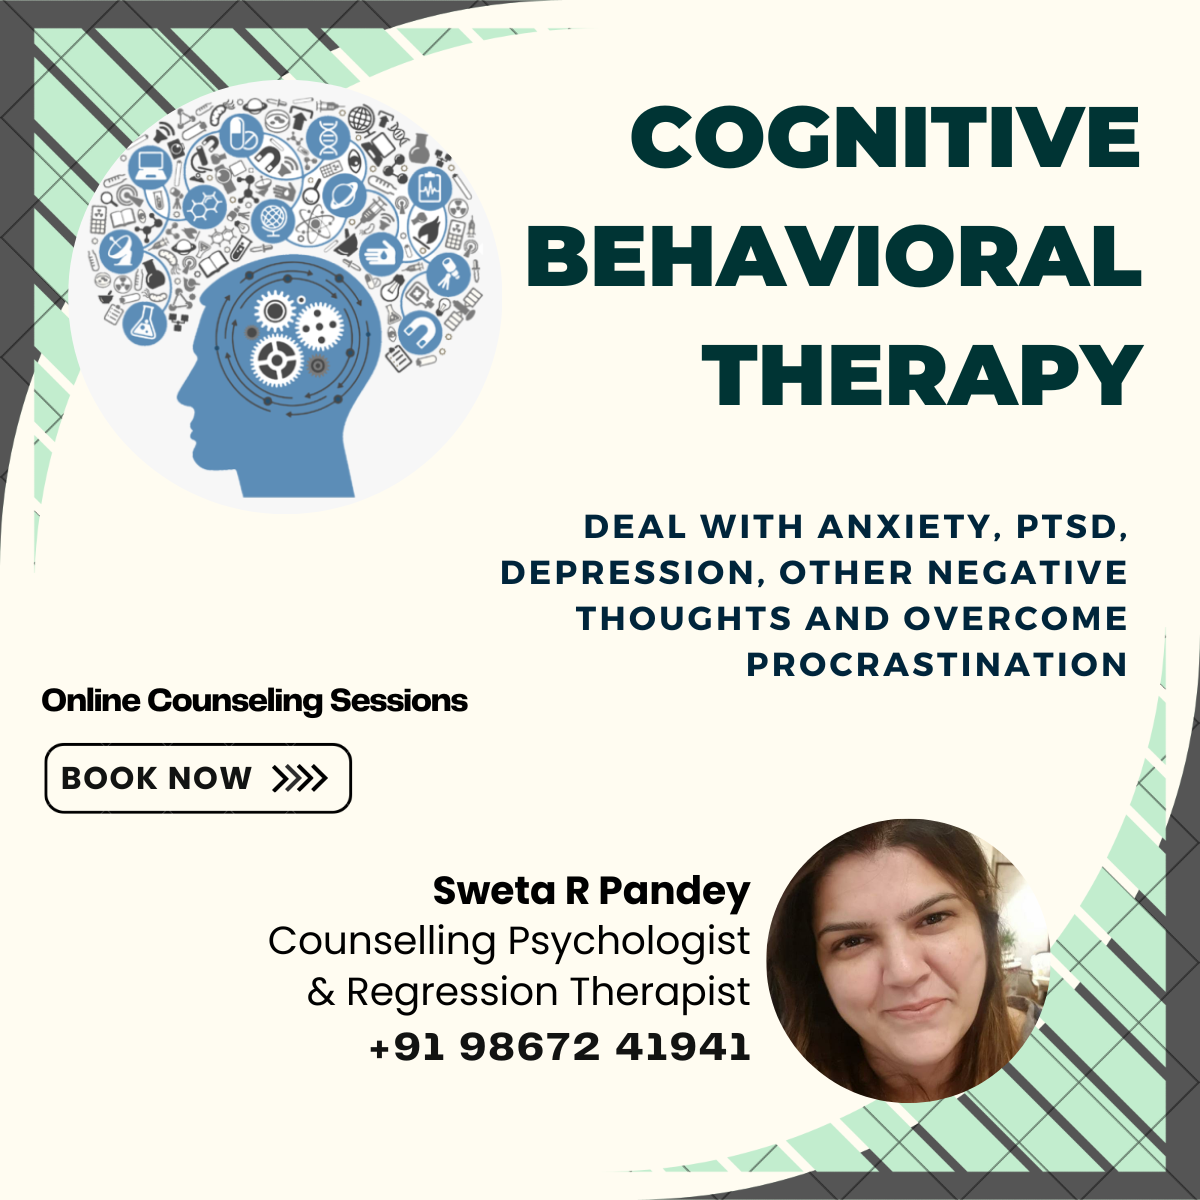 Sweta R Pandey - Cognitive Behavioral Therapy - Delhi